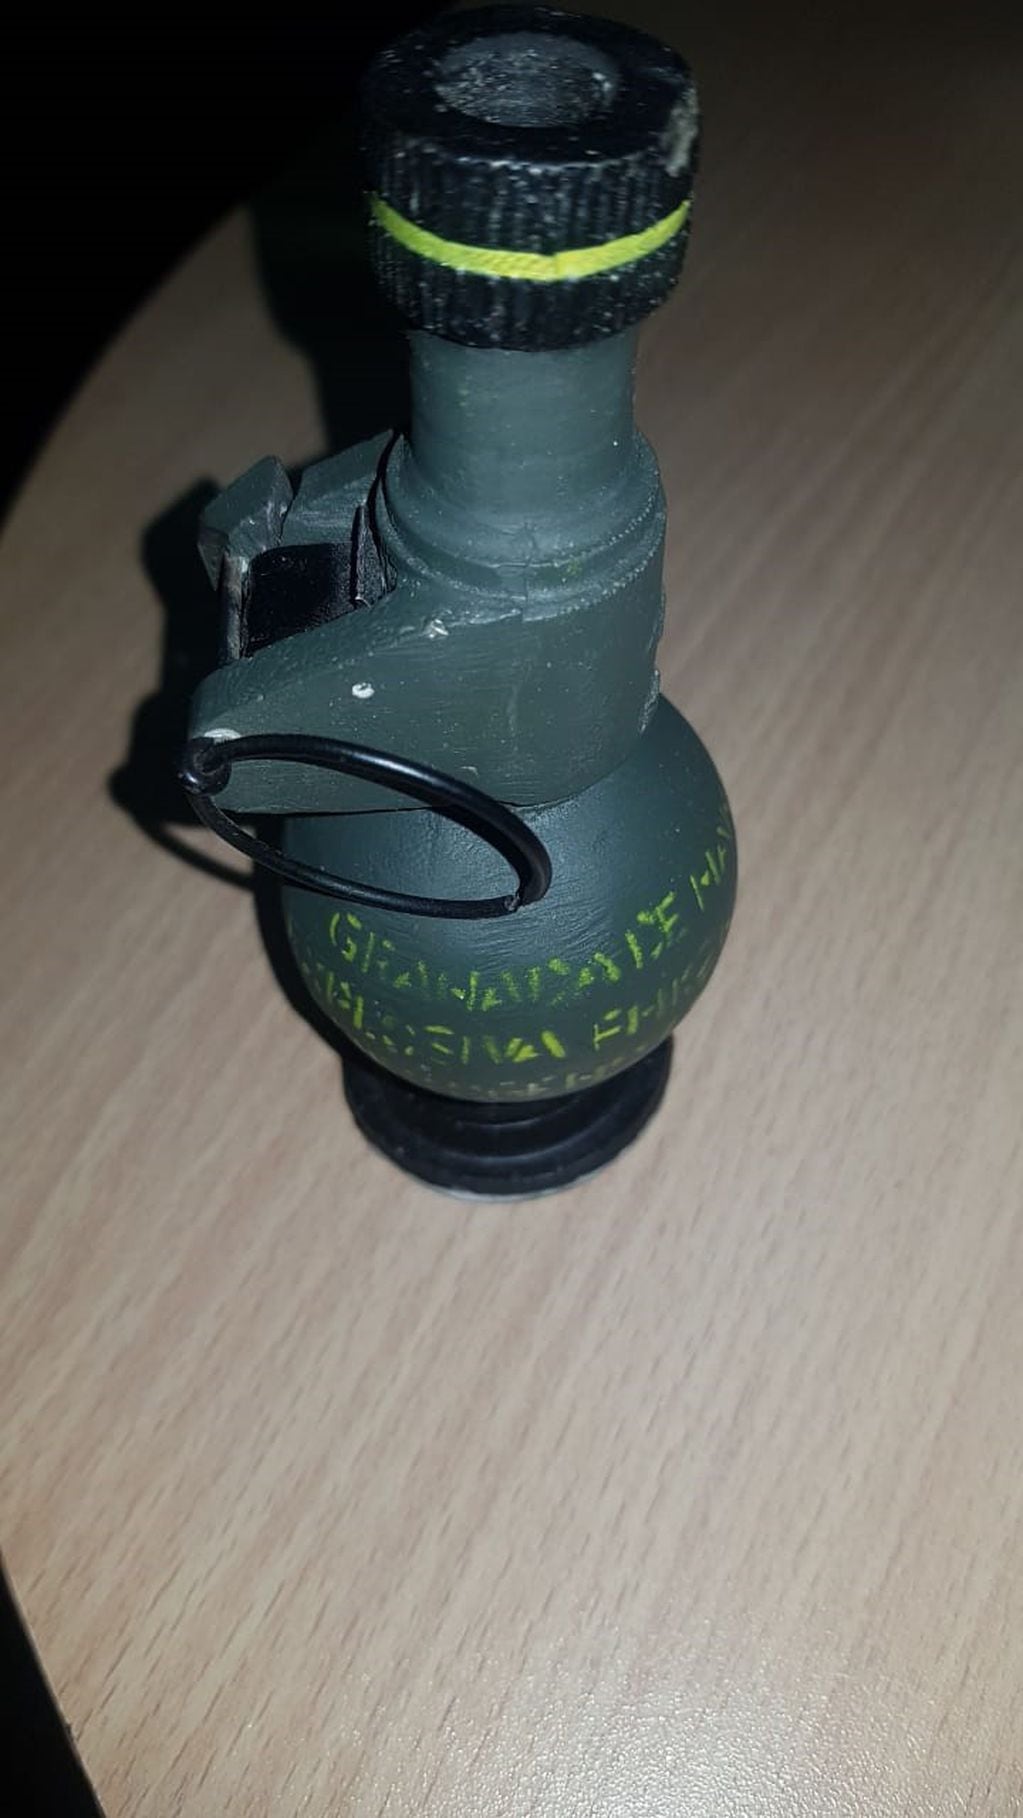 La granada utilizada.